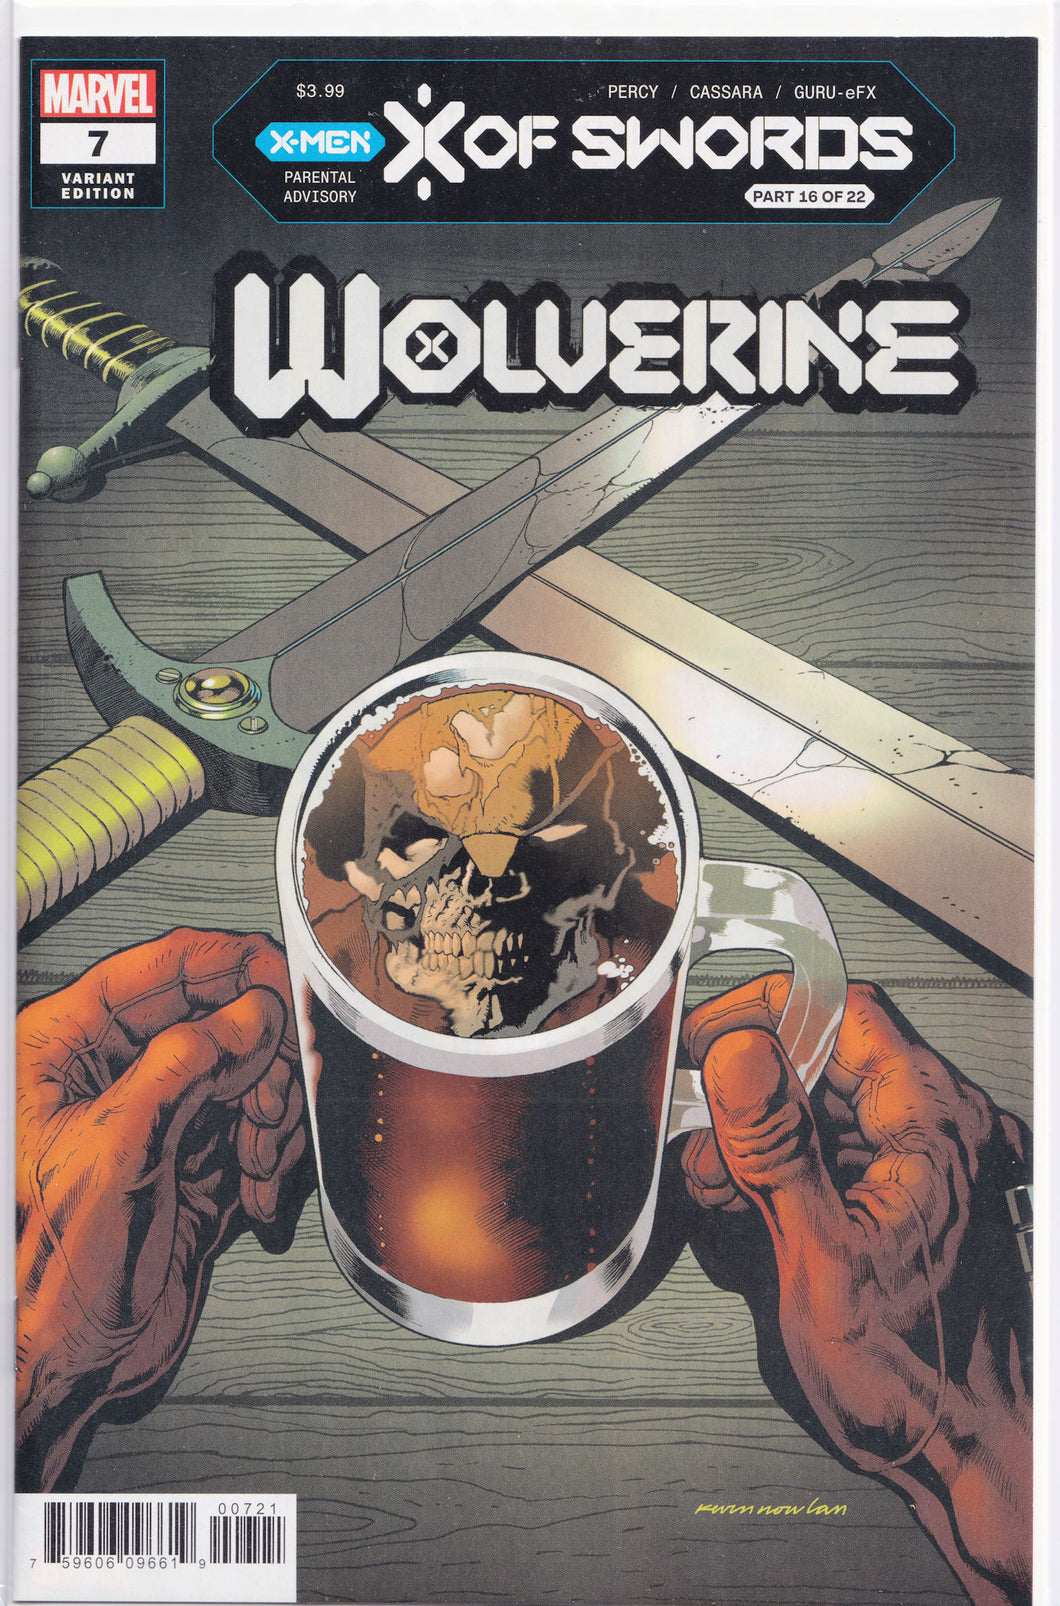 WOLVERINE #7 (KEVIN NOWLAN VARIANT)(1ST PRINT) COMIC BOOK ~ Marvel Comics